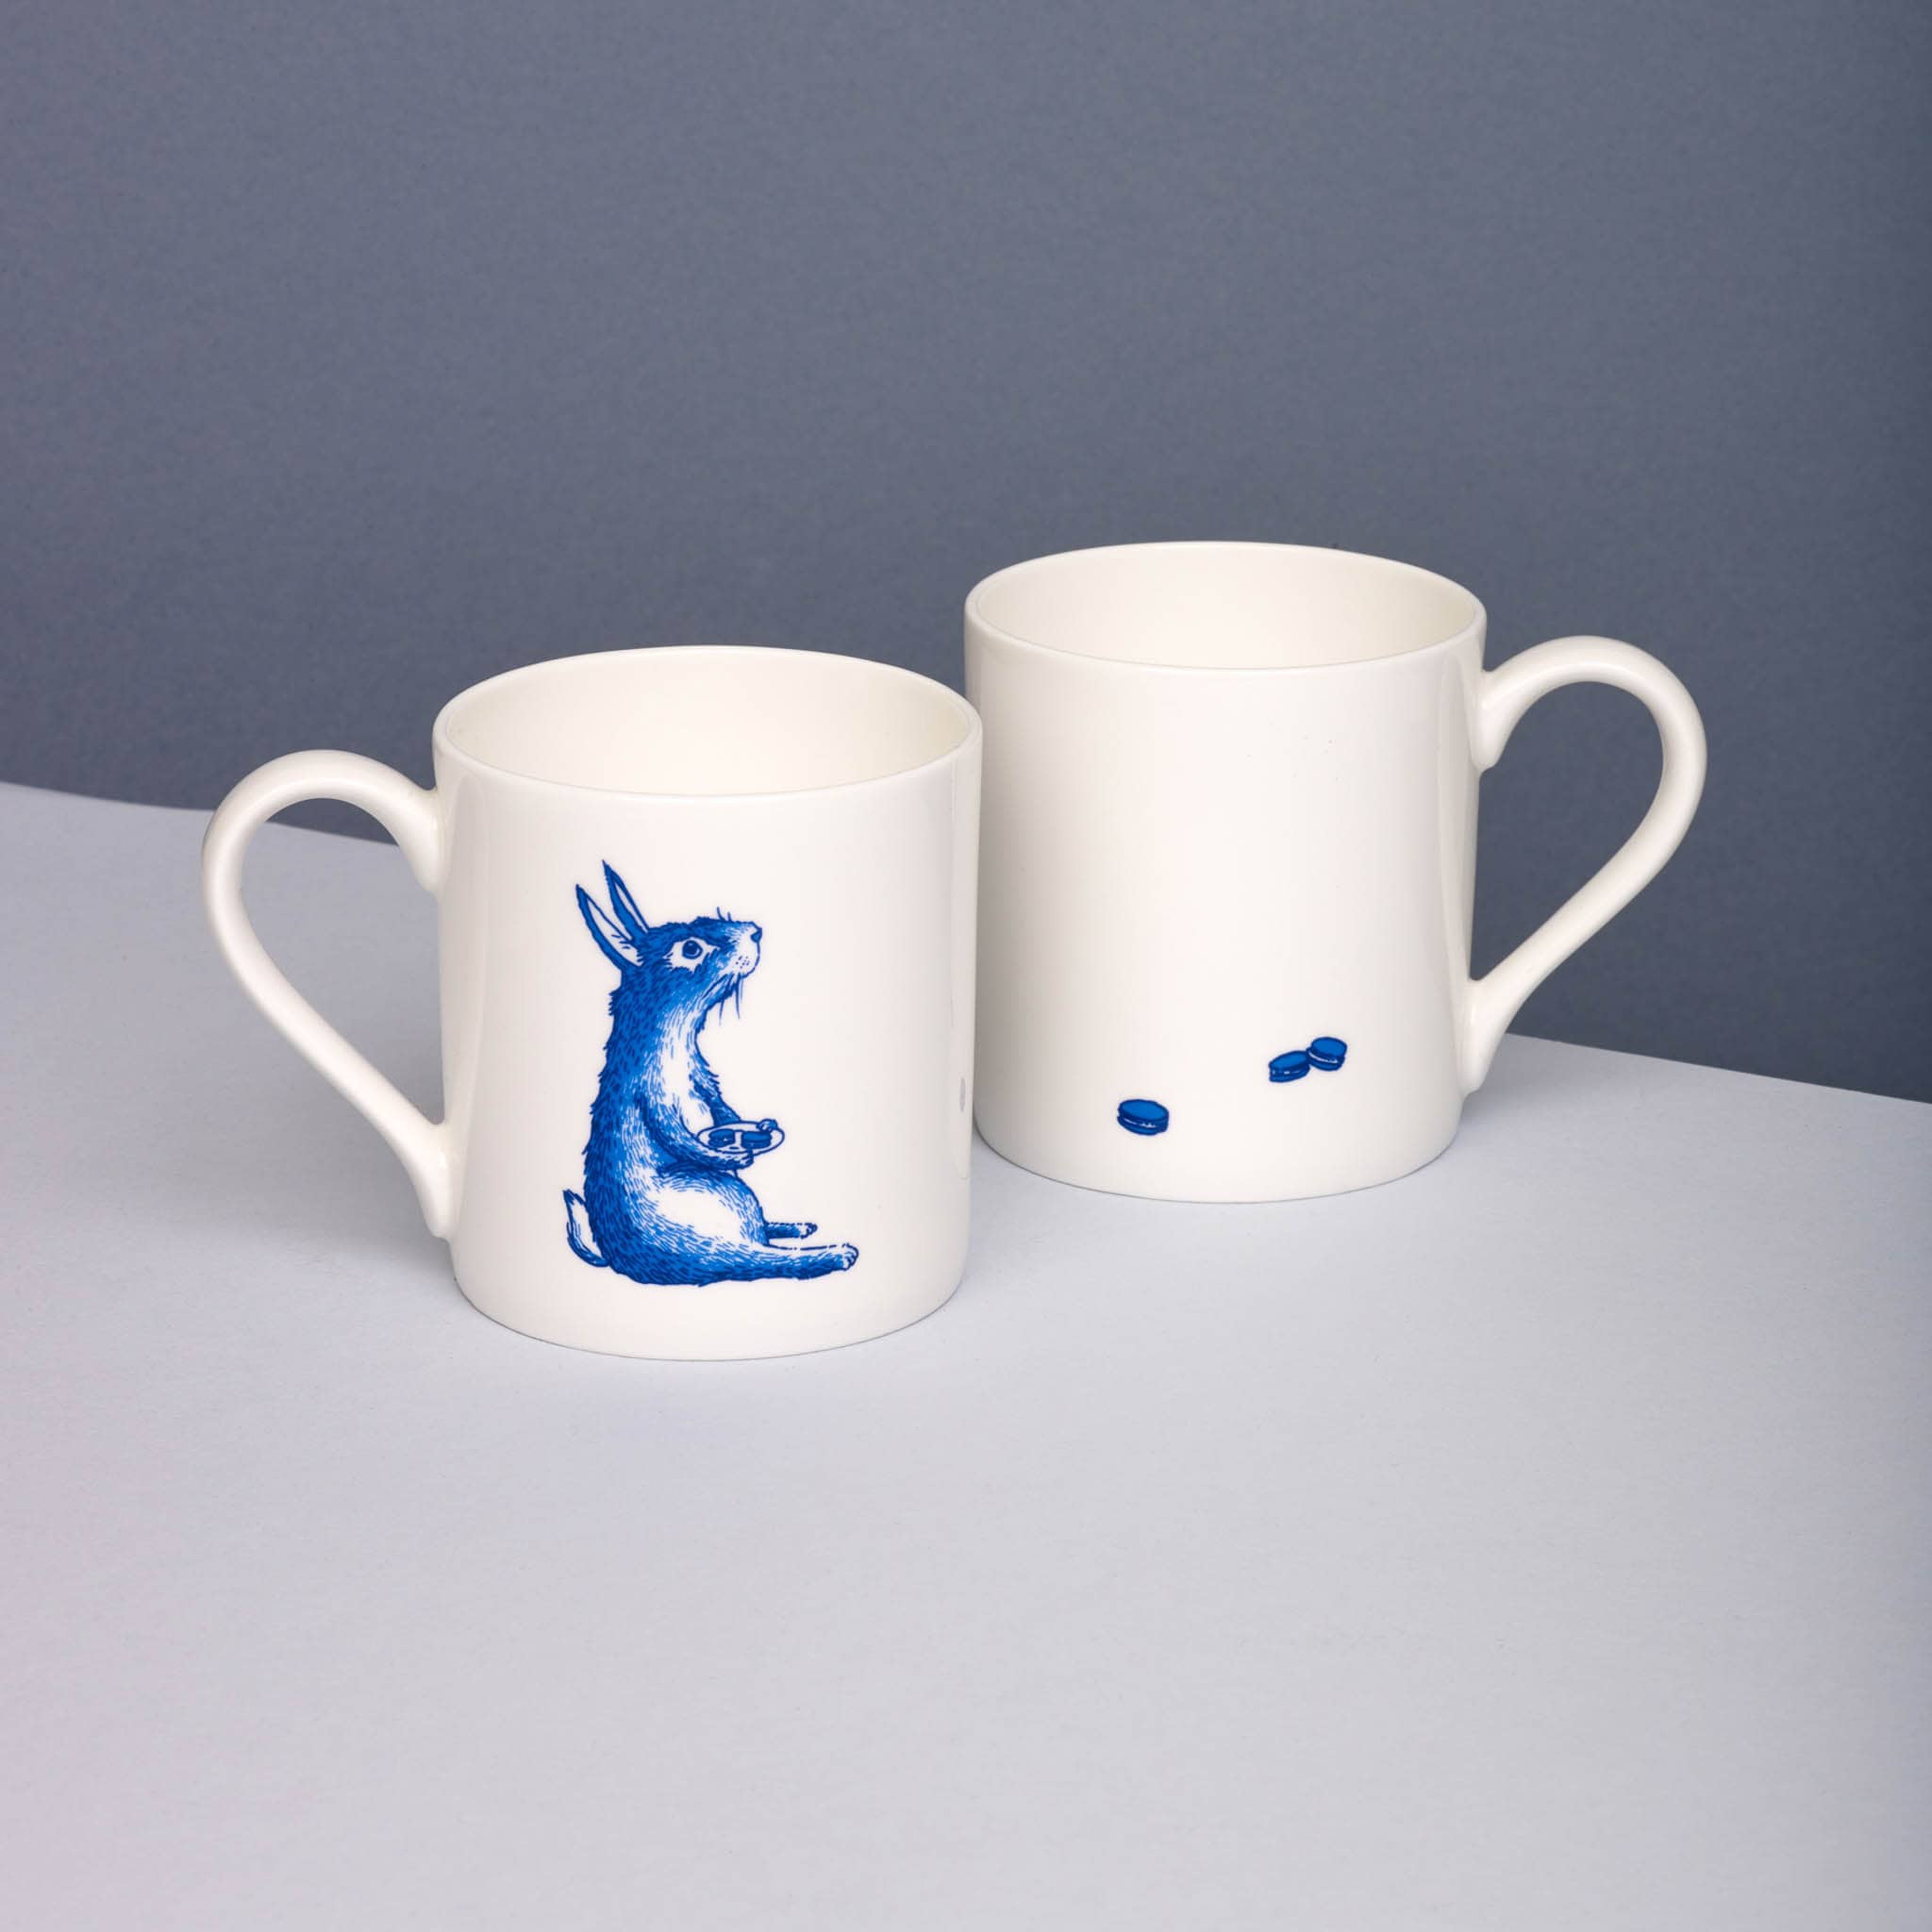 Blue Rabbit with Macaroons Mug 300ml